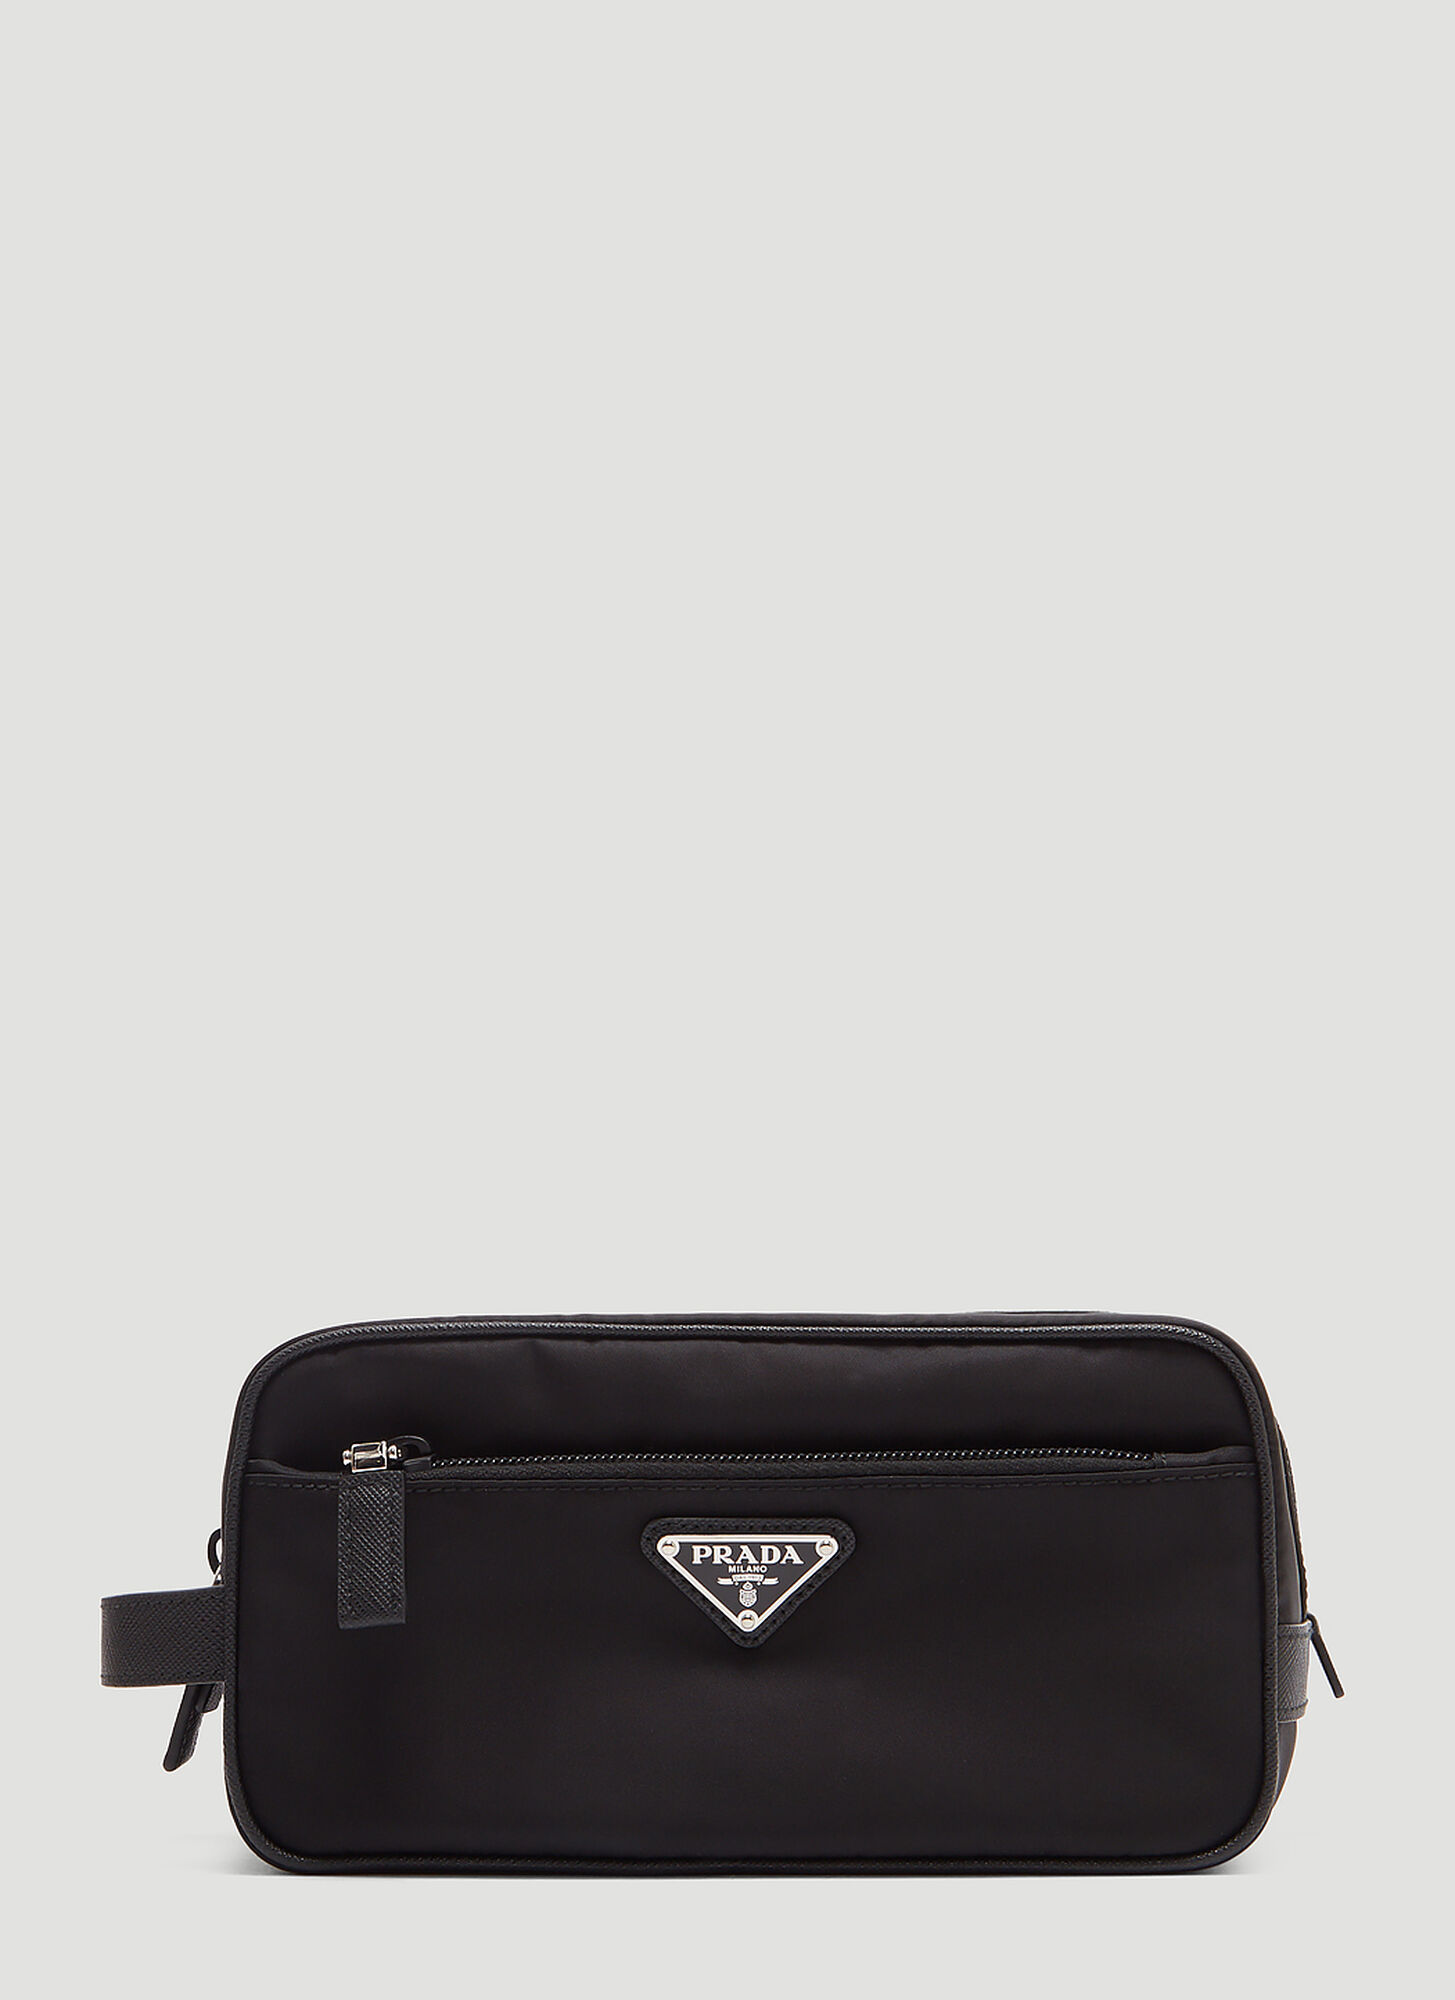 Prada Nylon Wash Bag in Black size One Size | The Fashionisto